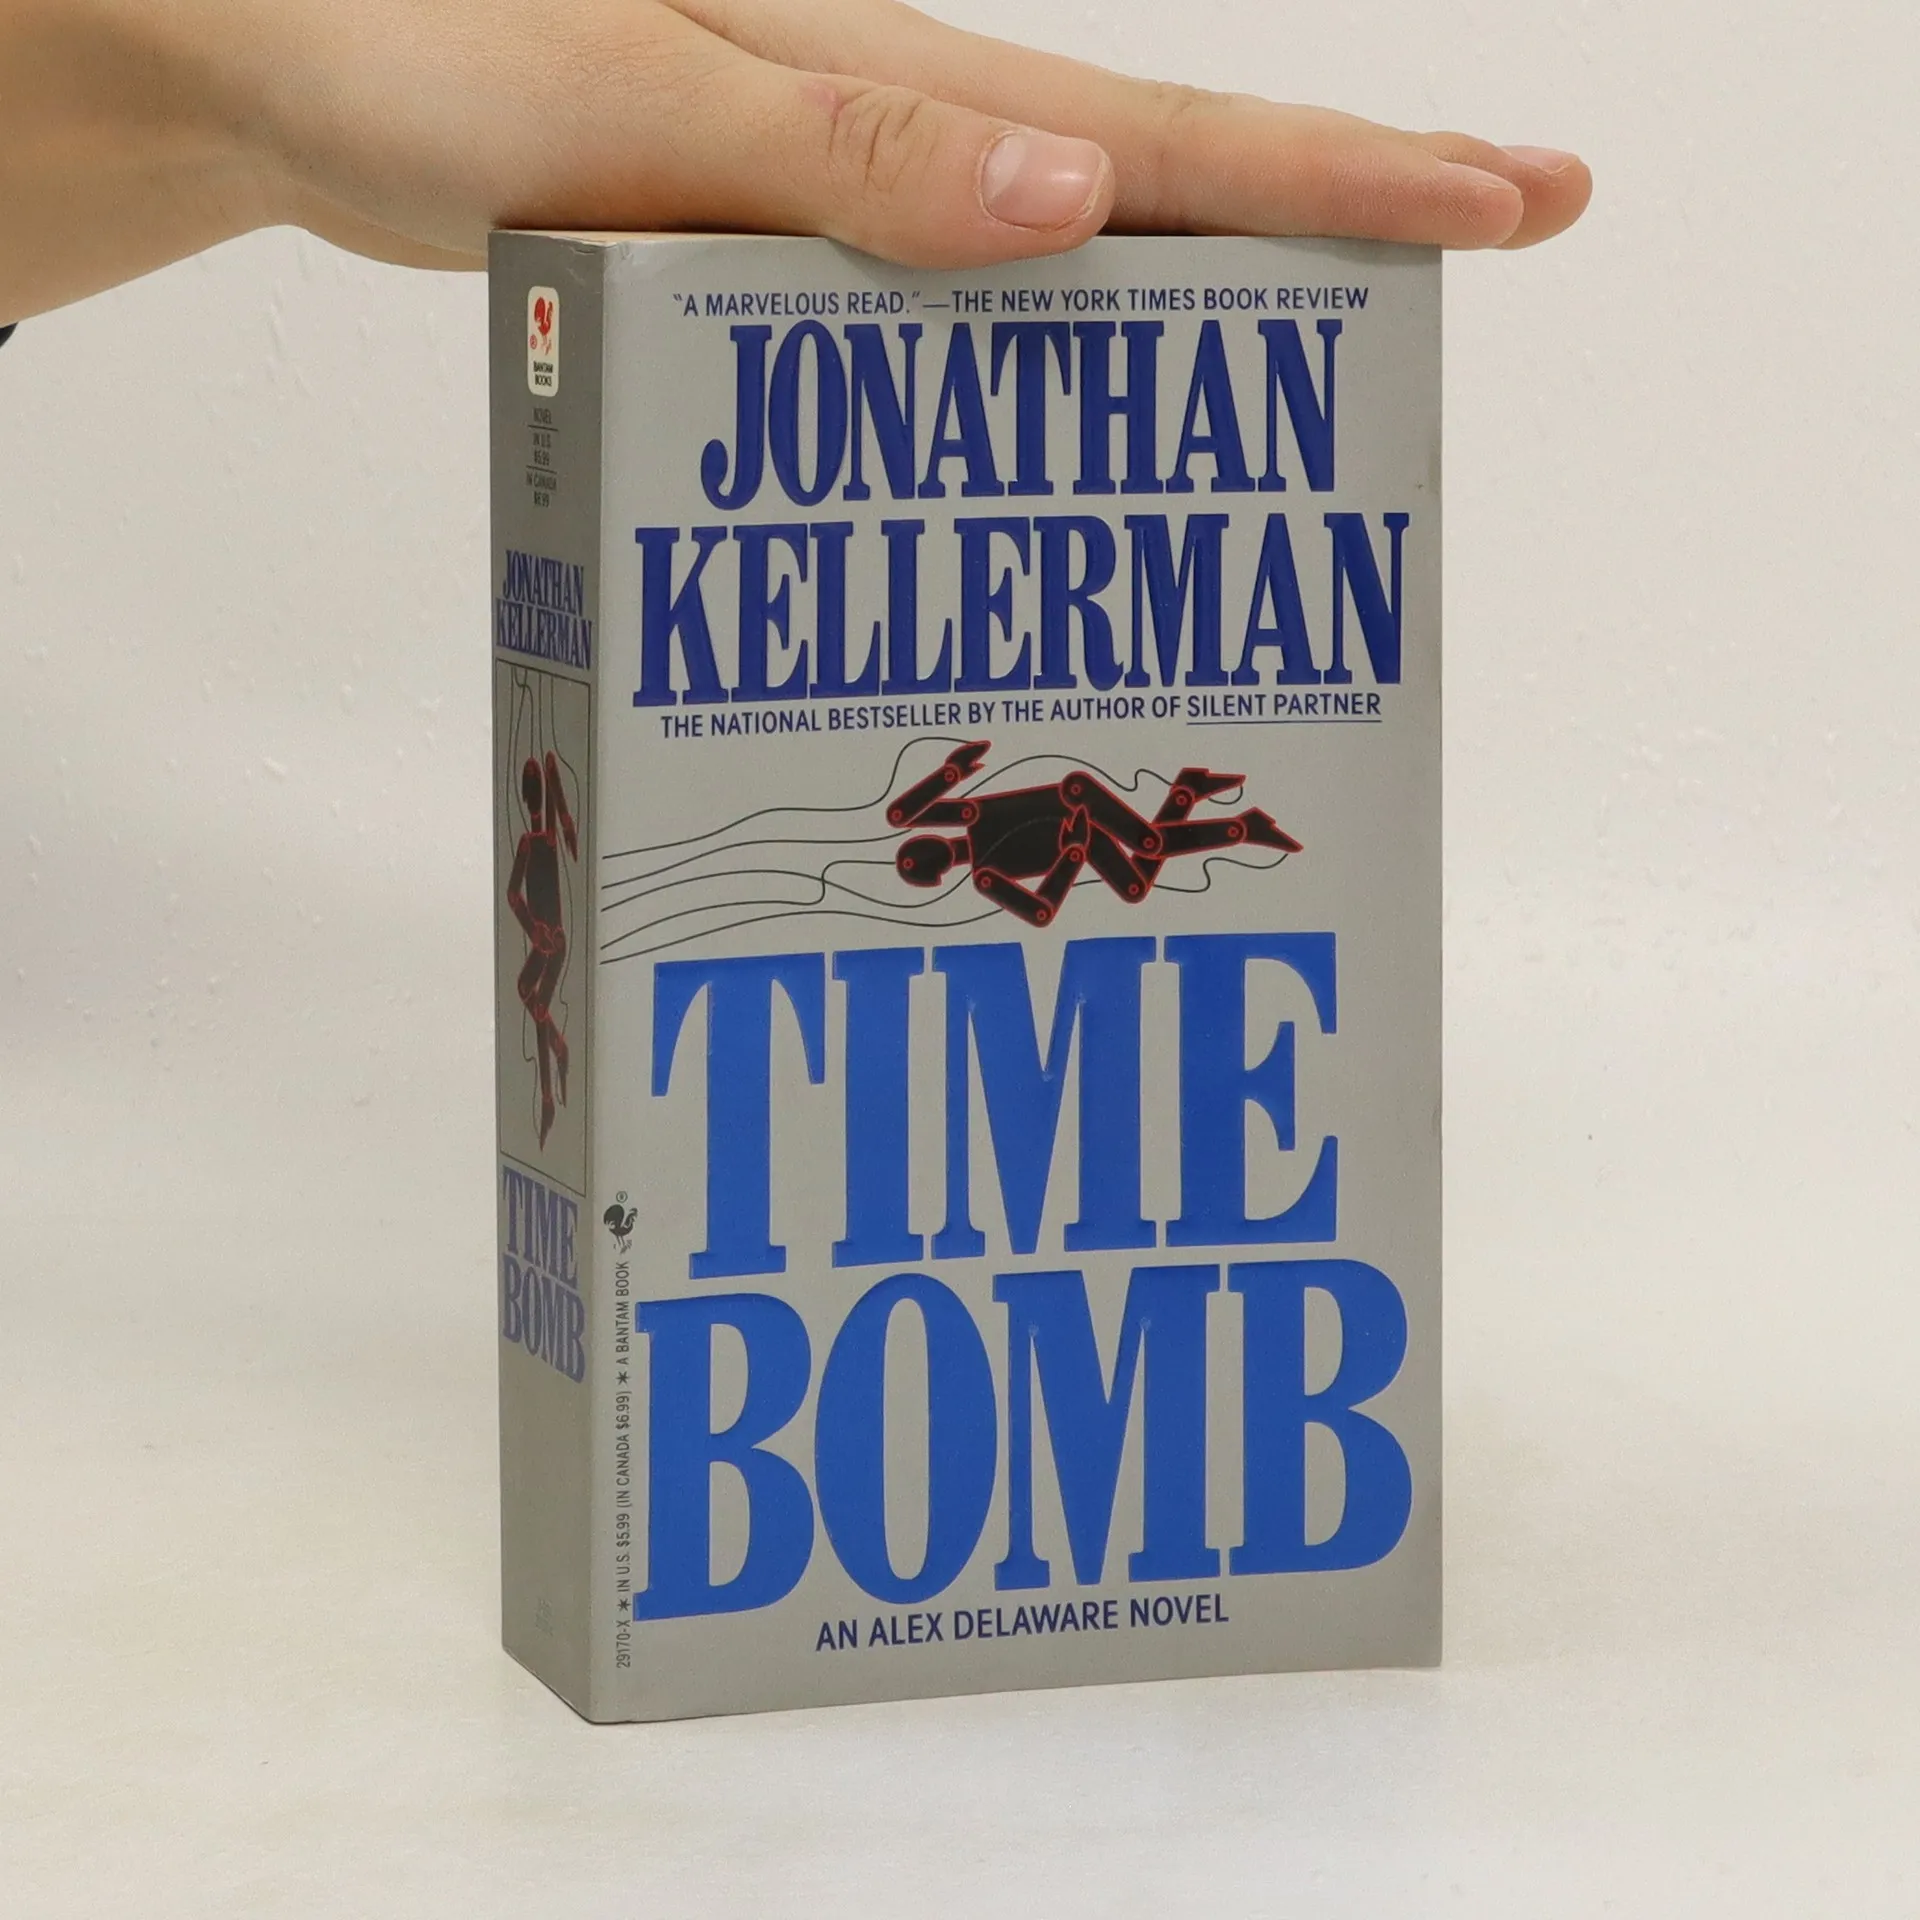 Time Bomb - Jonathan Kellerman